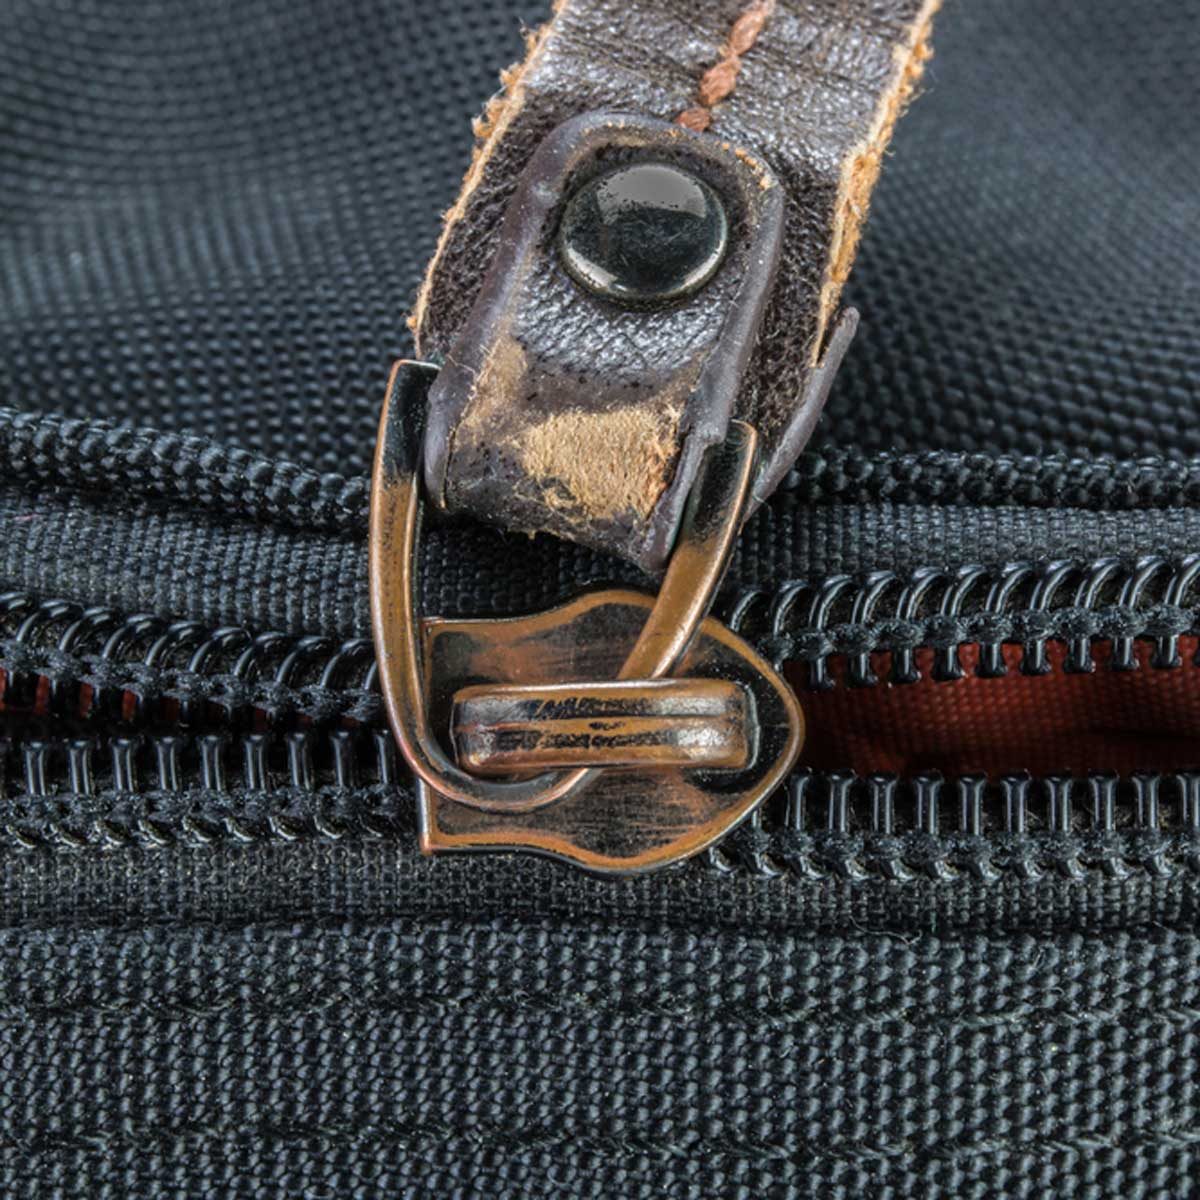 Zipper Repair: How to Fix a Broken Zipper